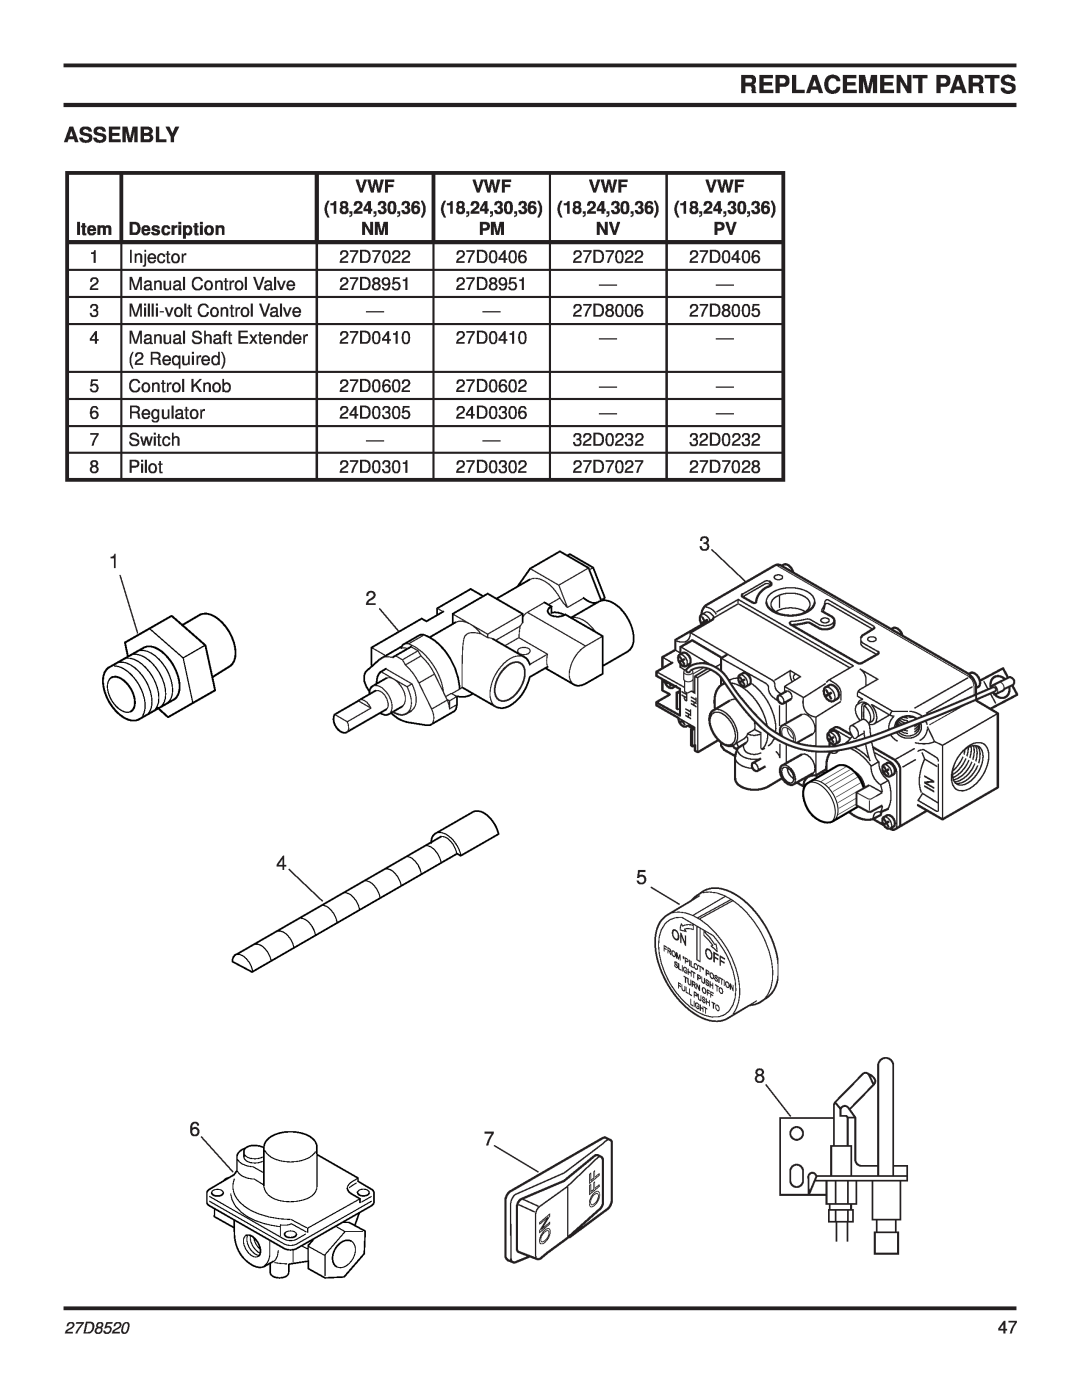 Monessen Hearth VWF18, VWF36, VWF30 manual Replacement Parts, Assembly, 3 1 2, 18,24,30,36, Item, Description 